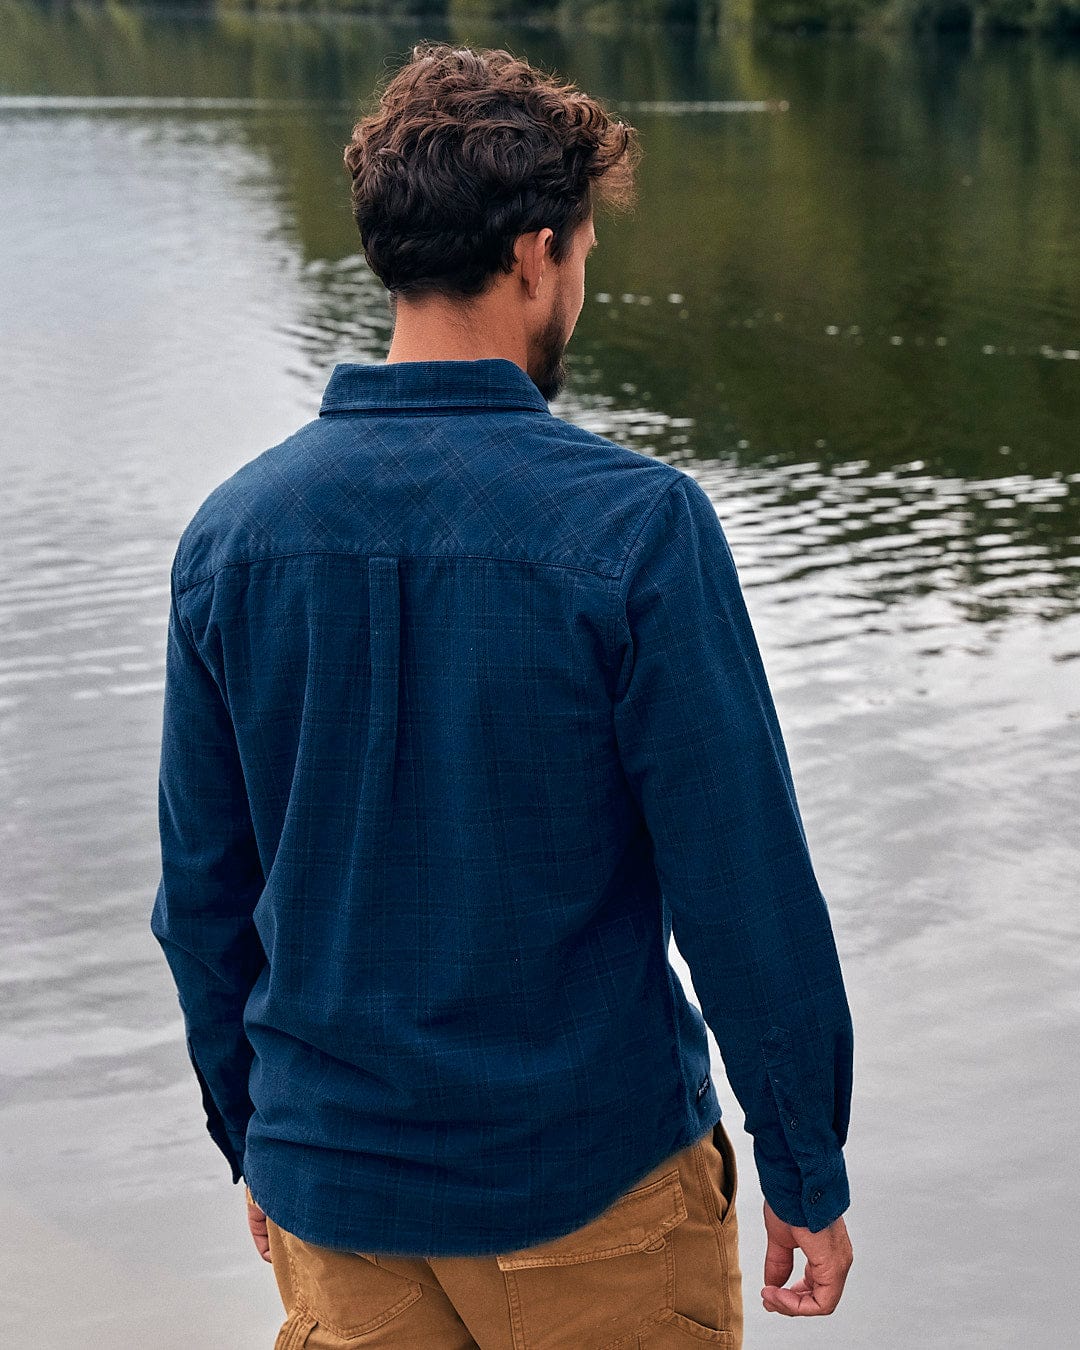 A man is standing by a lake in a Saltrock Jaxon - Mens Check Long Sleeve Shirt - Dark Blue.